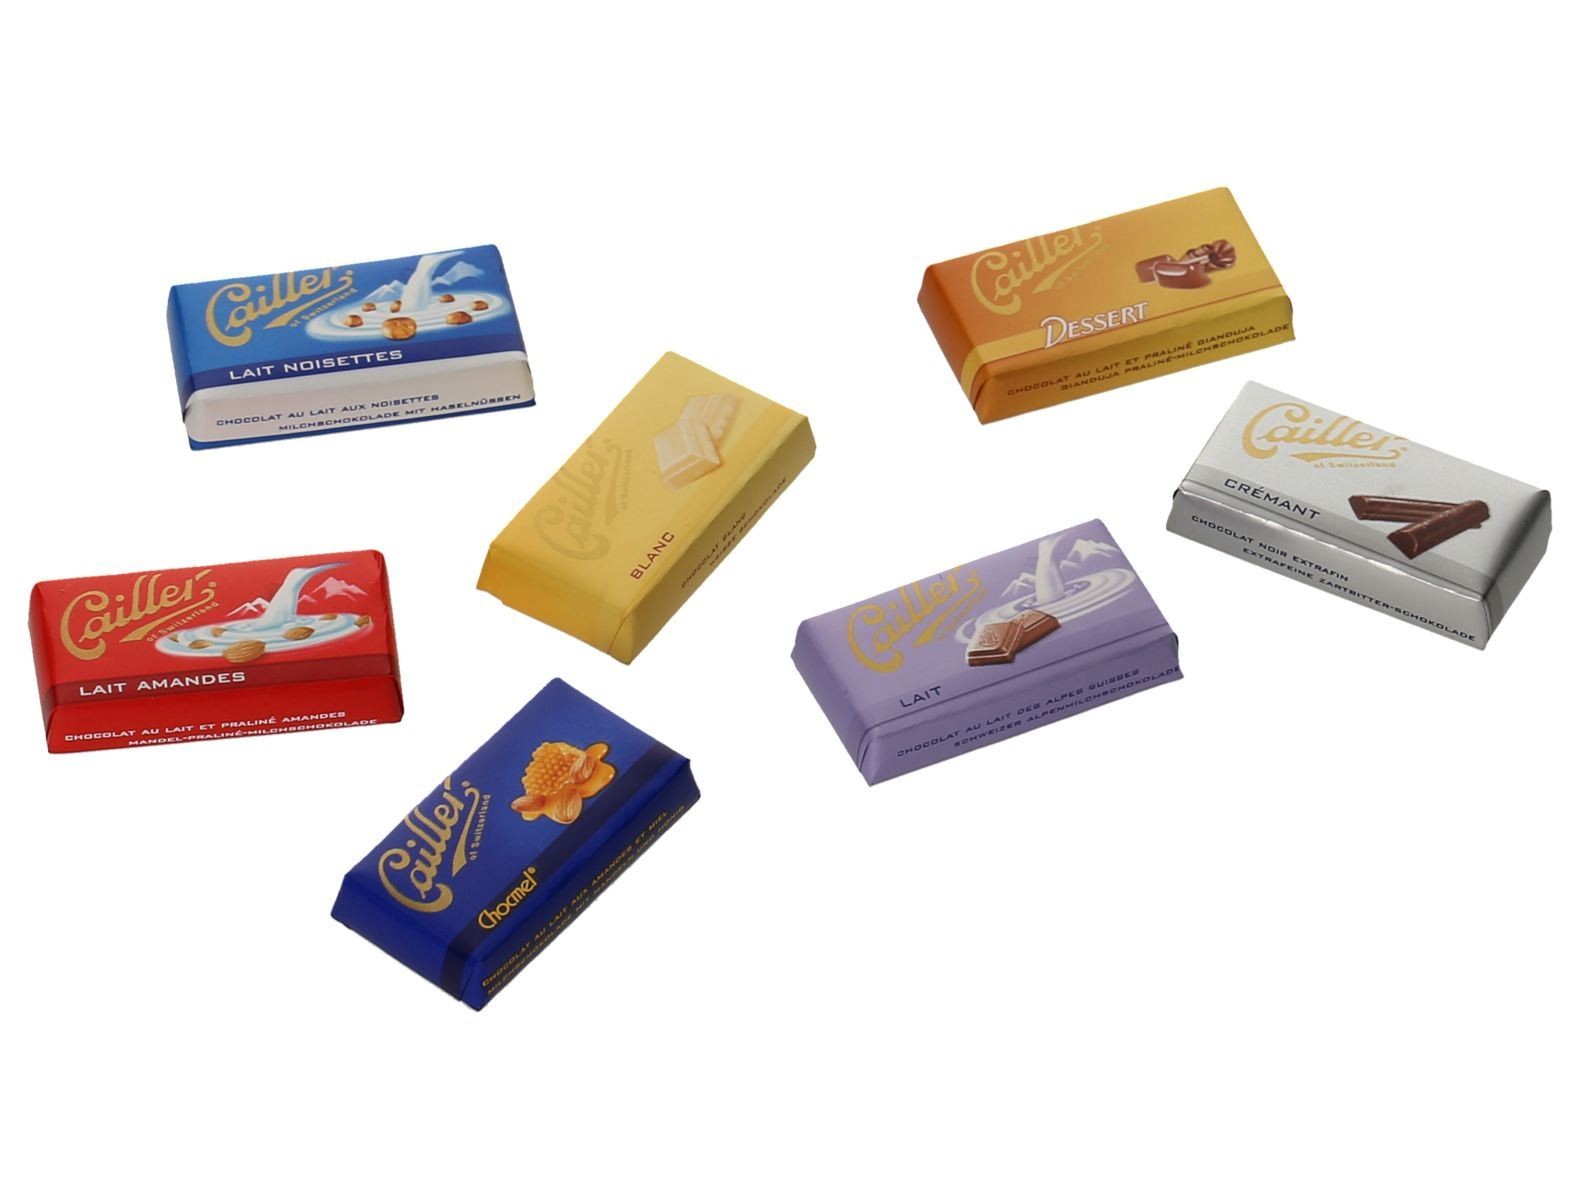 Cailler - 'Napolitains' Chocolates (100 pcs, 500 g)